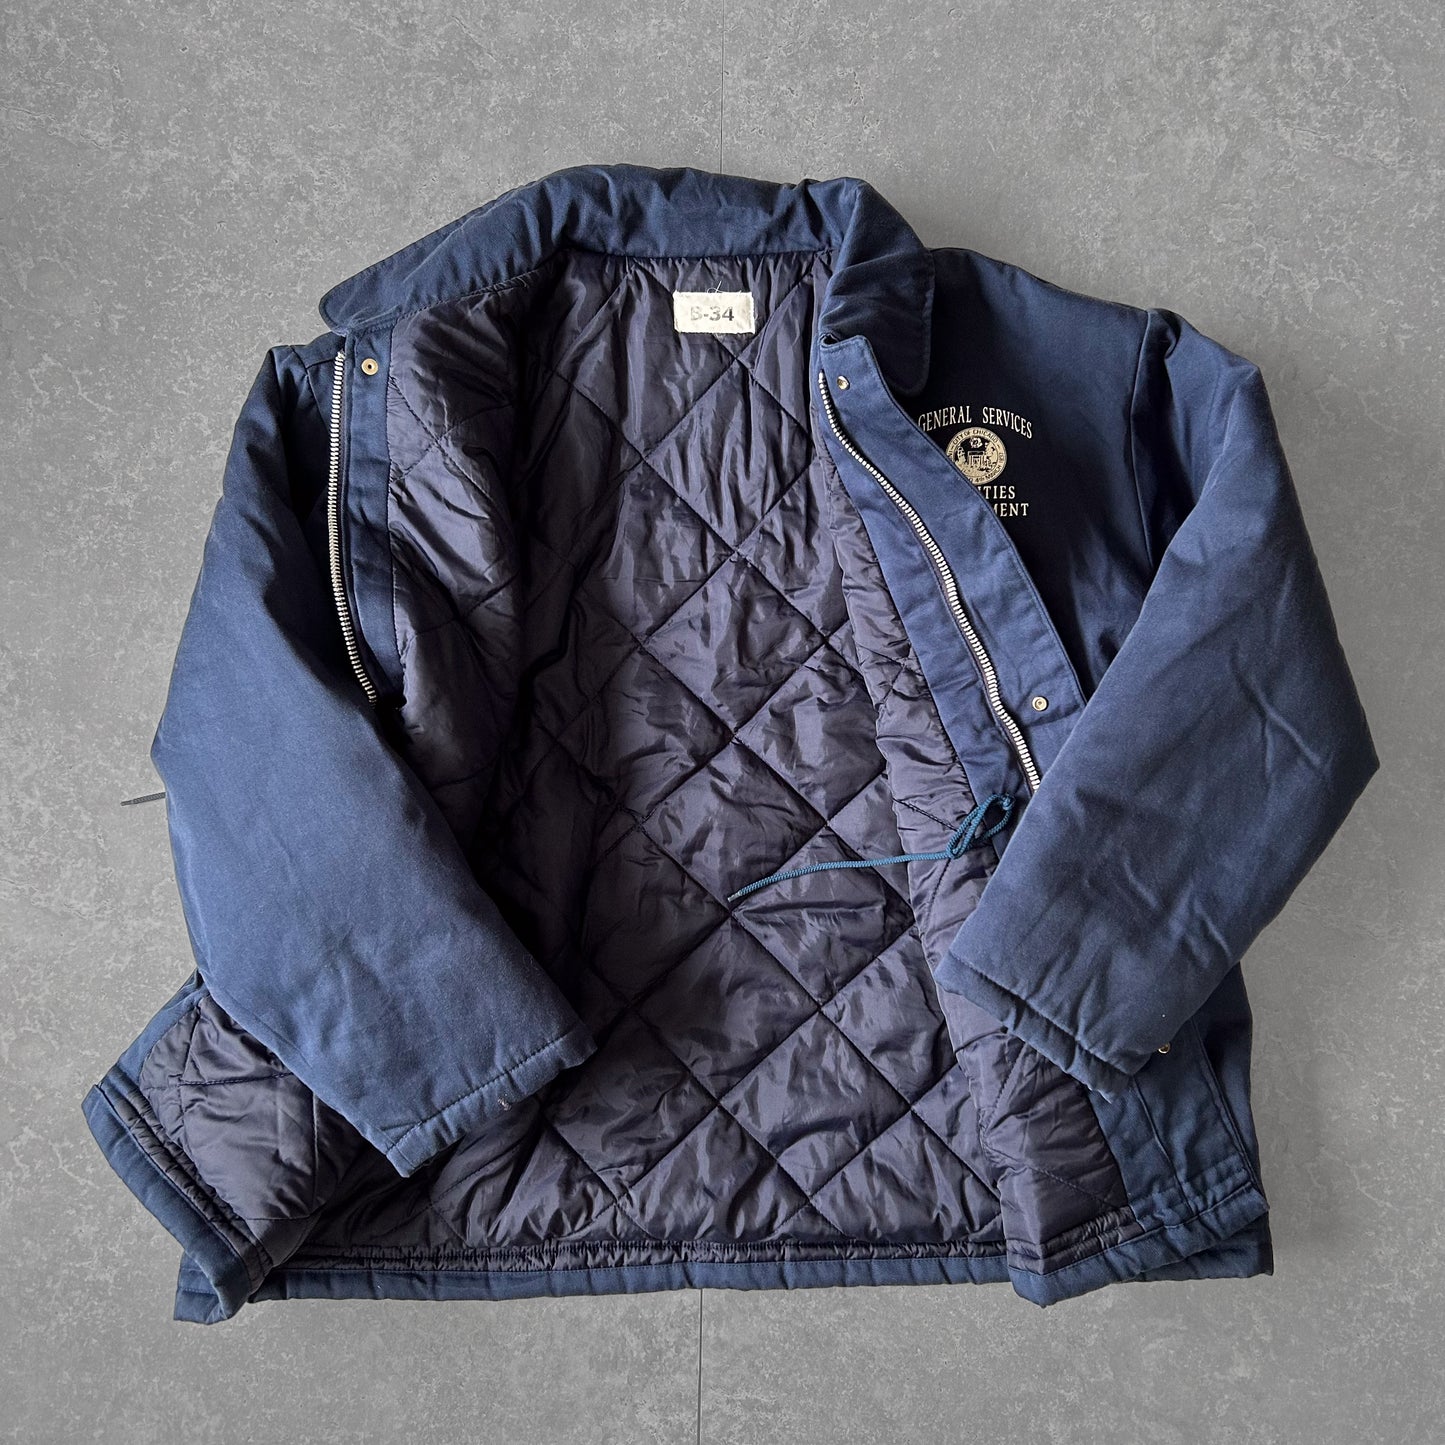 1990s - vintage b-34 quilted work jacket